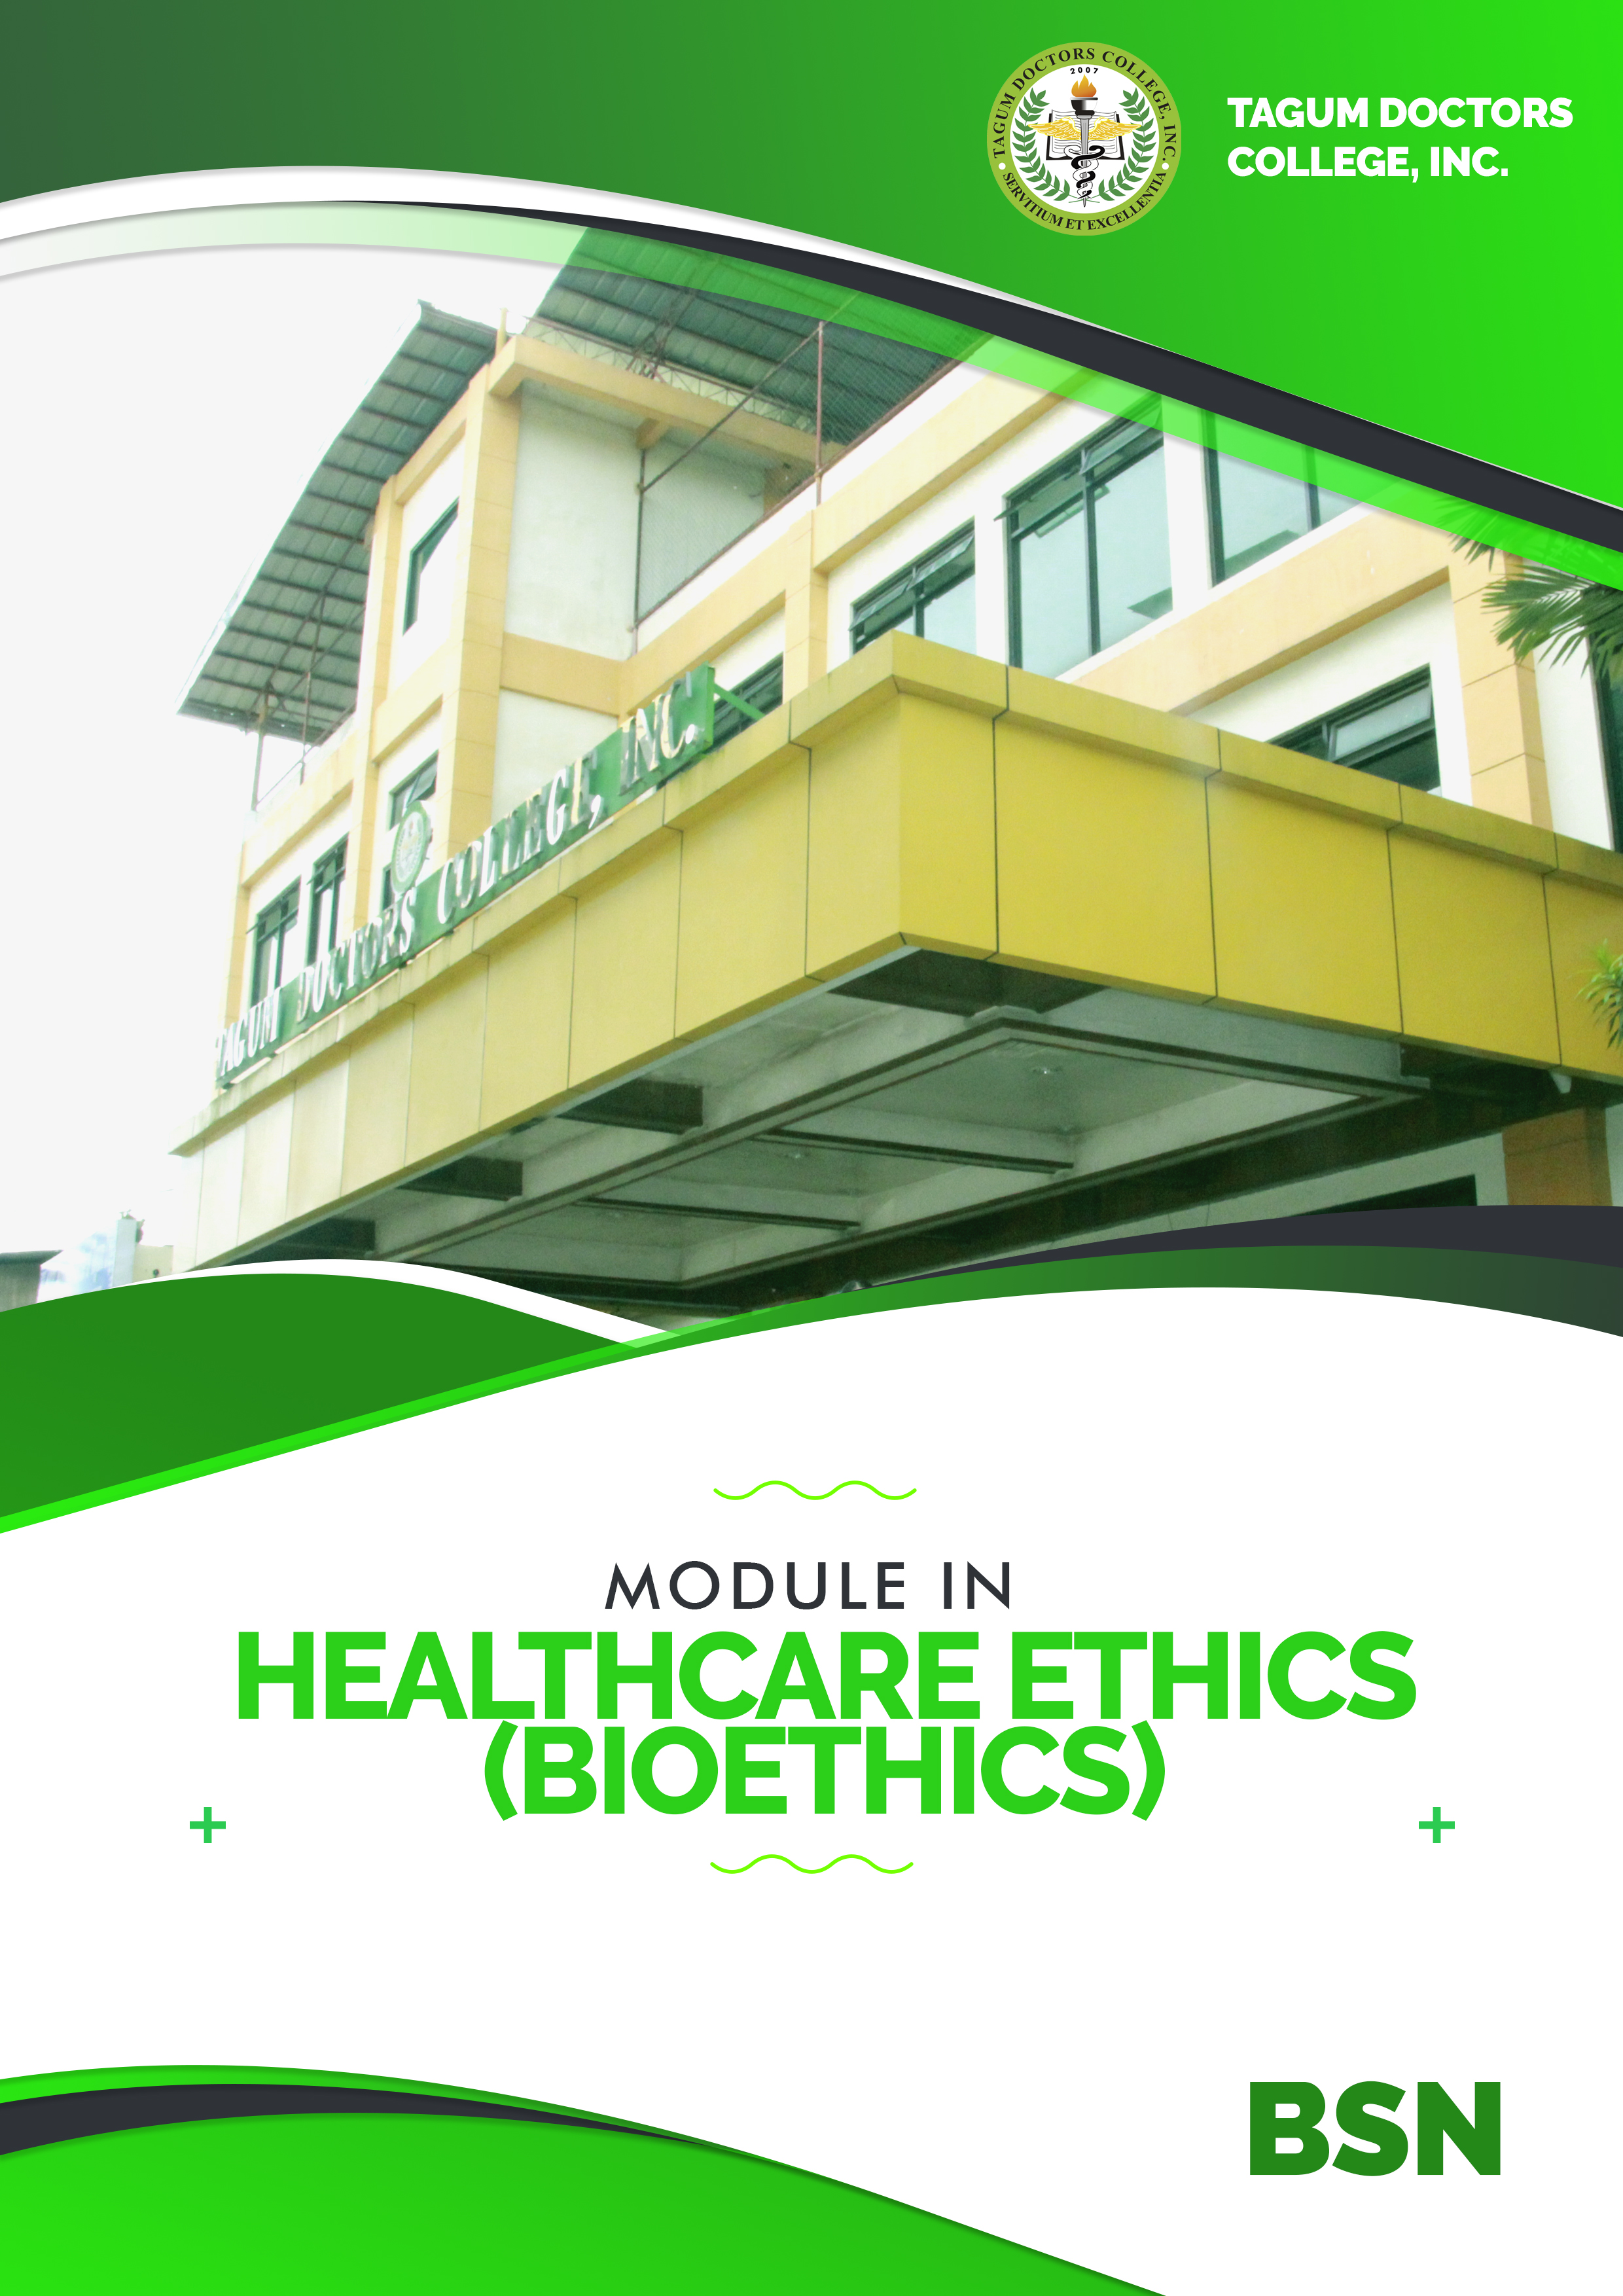 Health Care Ethics - BSN 2B